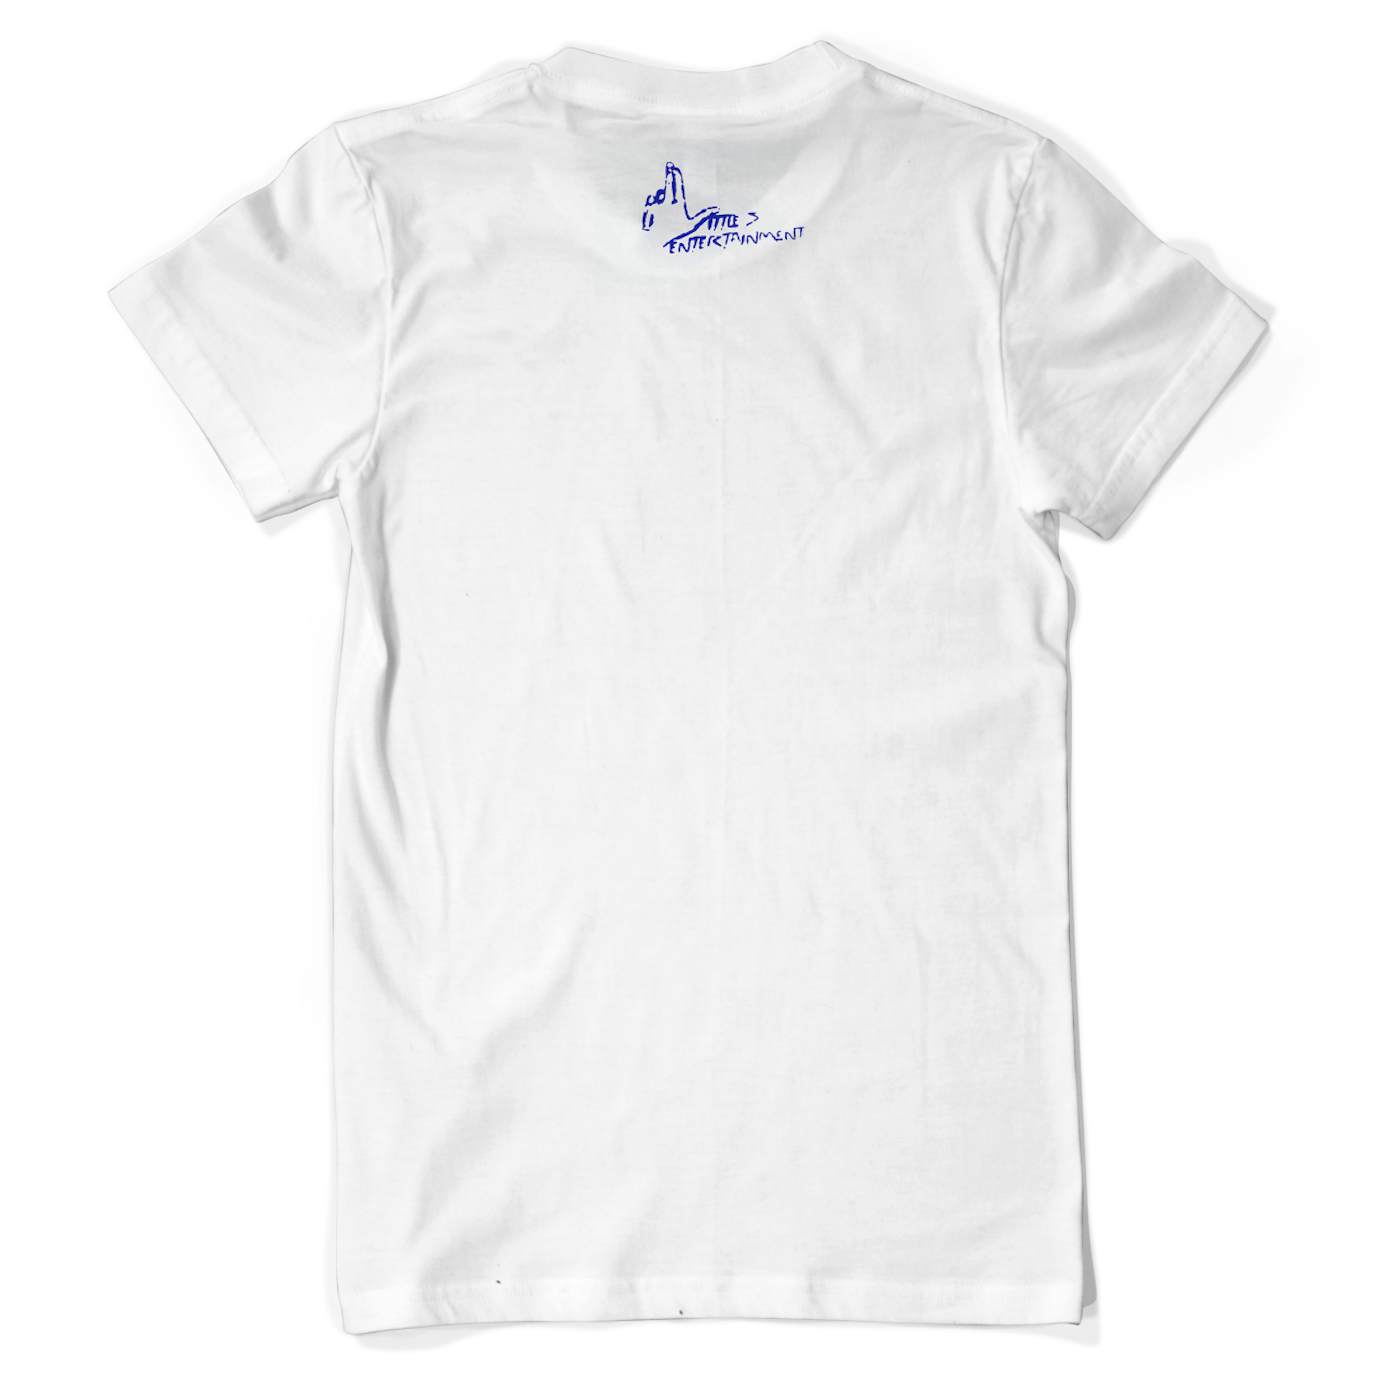 Tay Way - White / Blue T-Shirt